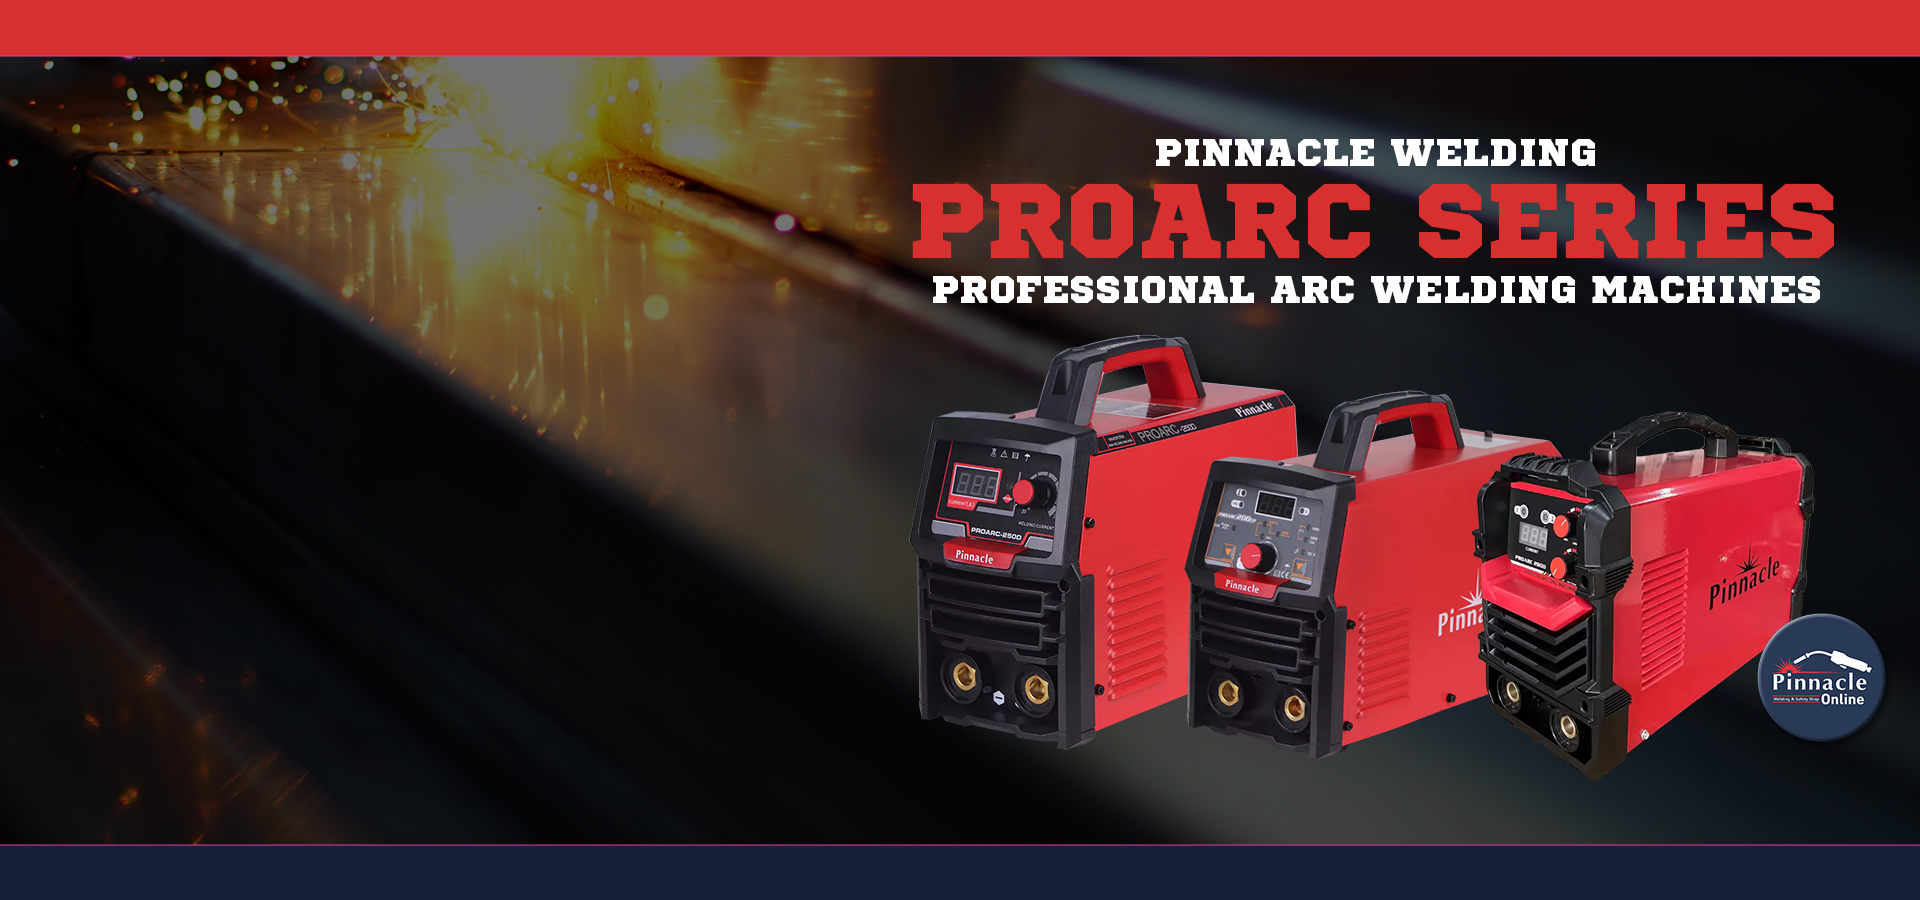 Pinnacle Welding PROARC Series ARC Welding Machines for Professional Machine Welding in South Africaslider_item_47UnW9